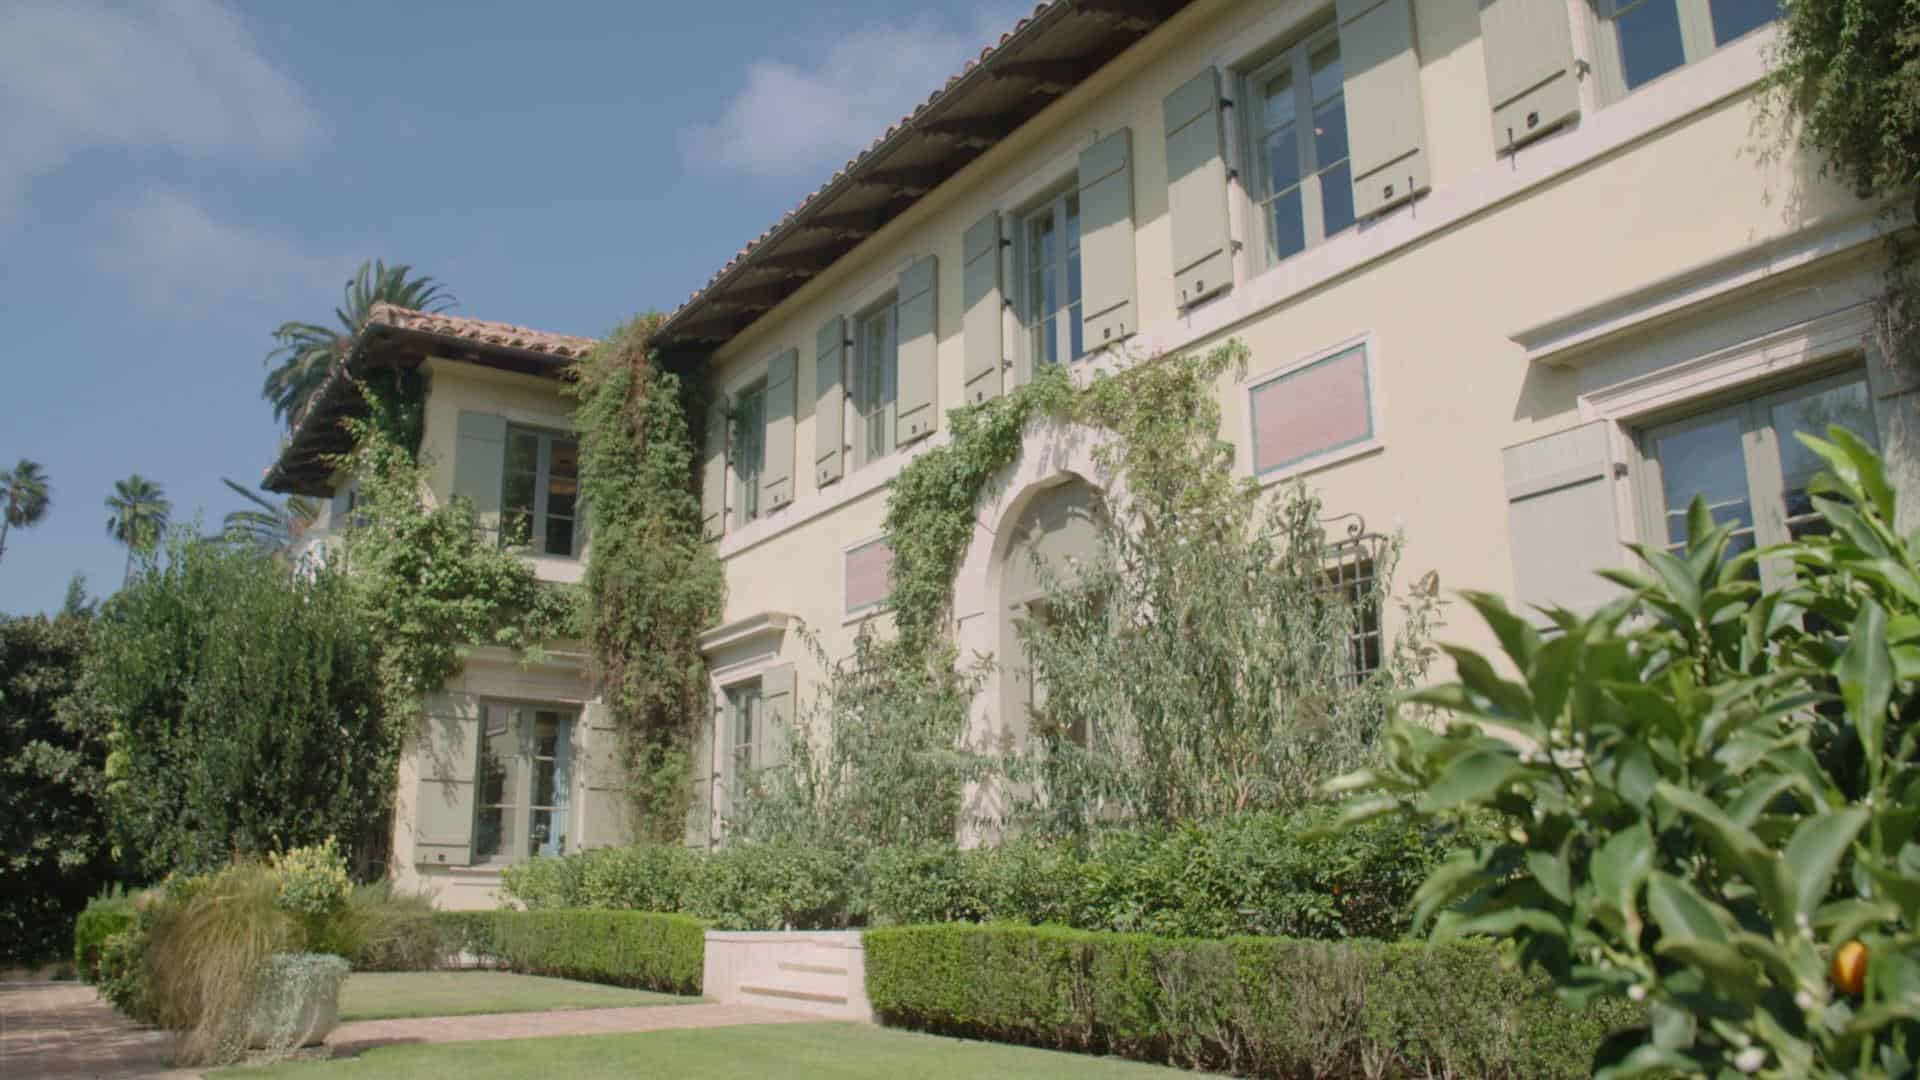 A Glimpse of Jim Belushi's Mansion (Credits: LA Times)